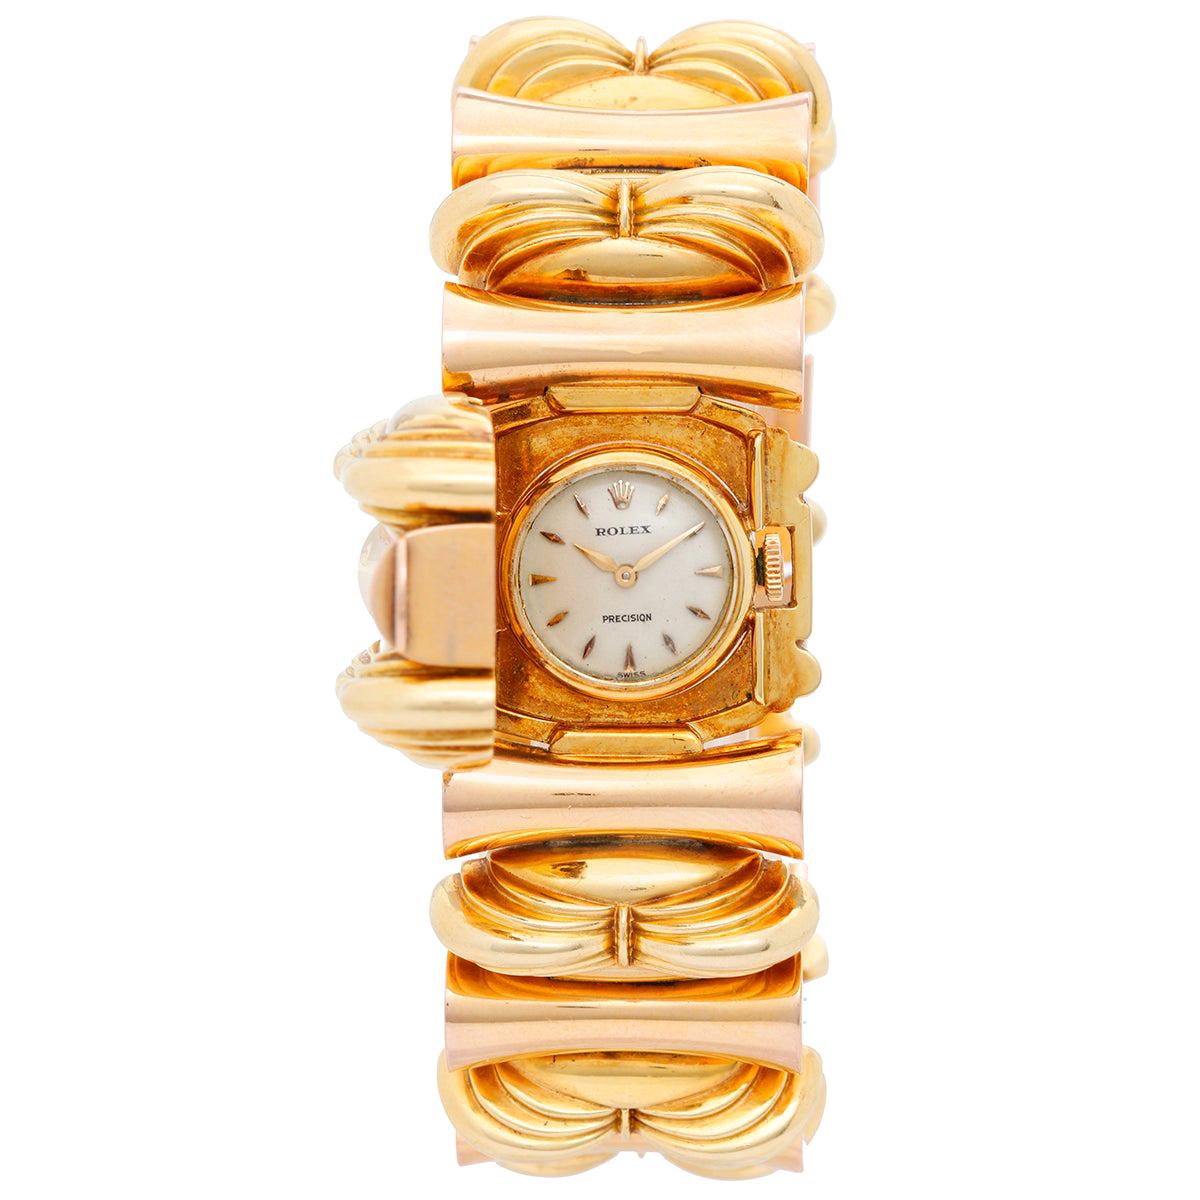 Rolex Ladies Tri-Color Gold Precision Manual Wind Bracelet Wristwatch, circa 1950